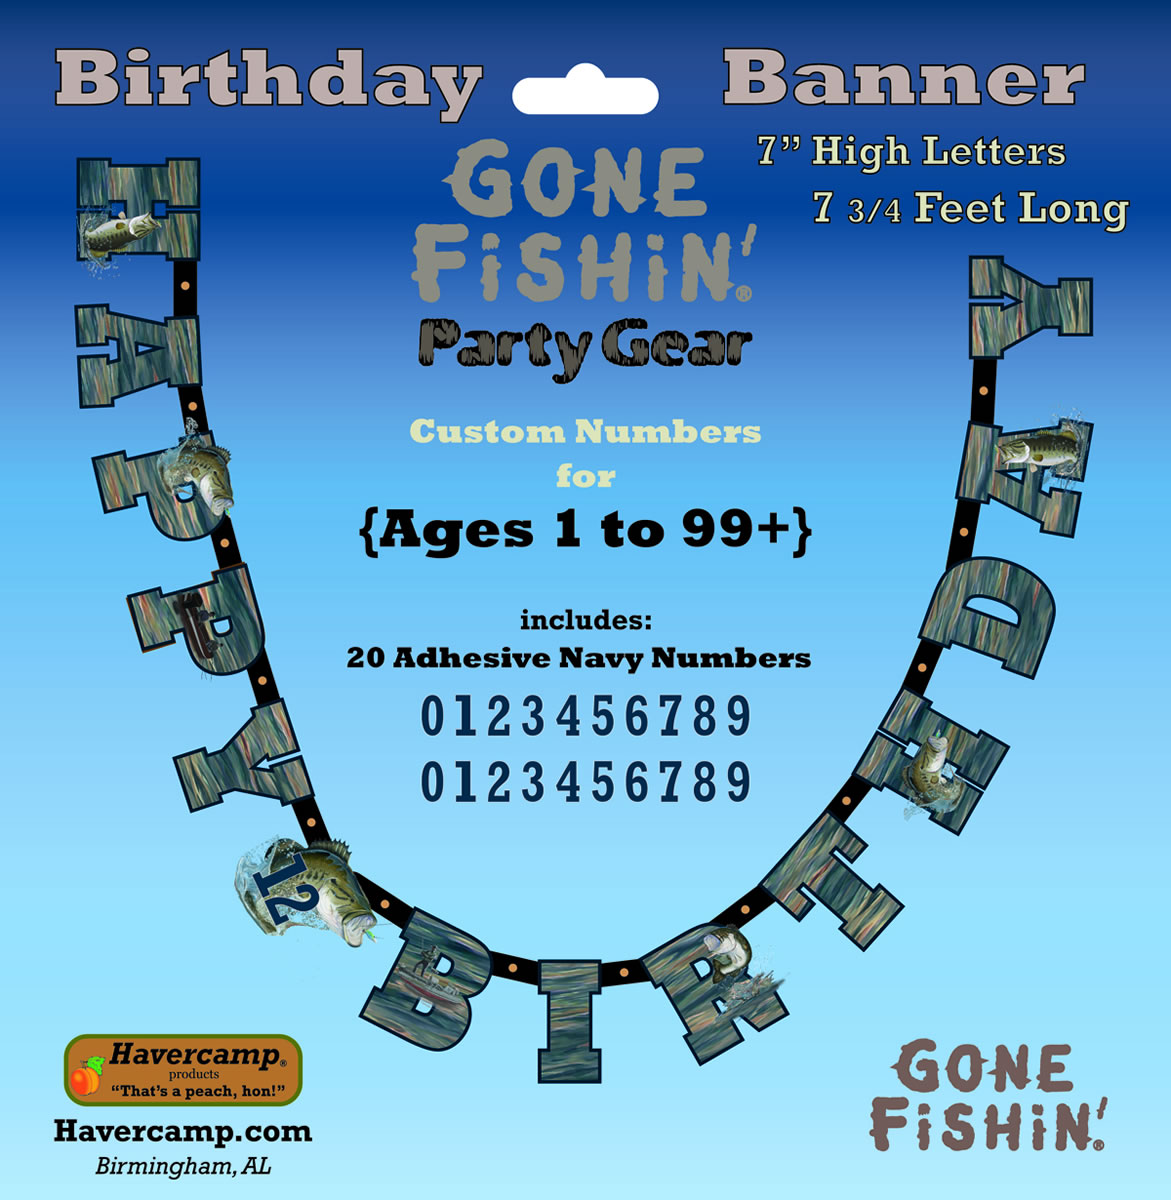 Gone Fishin' Happy Birthday Banner